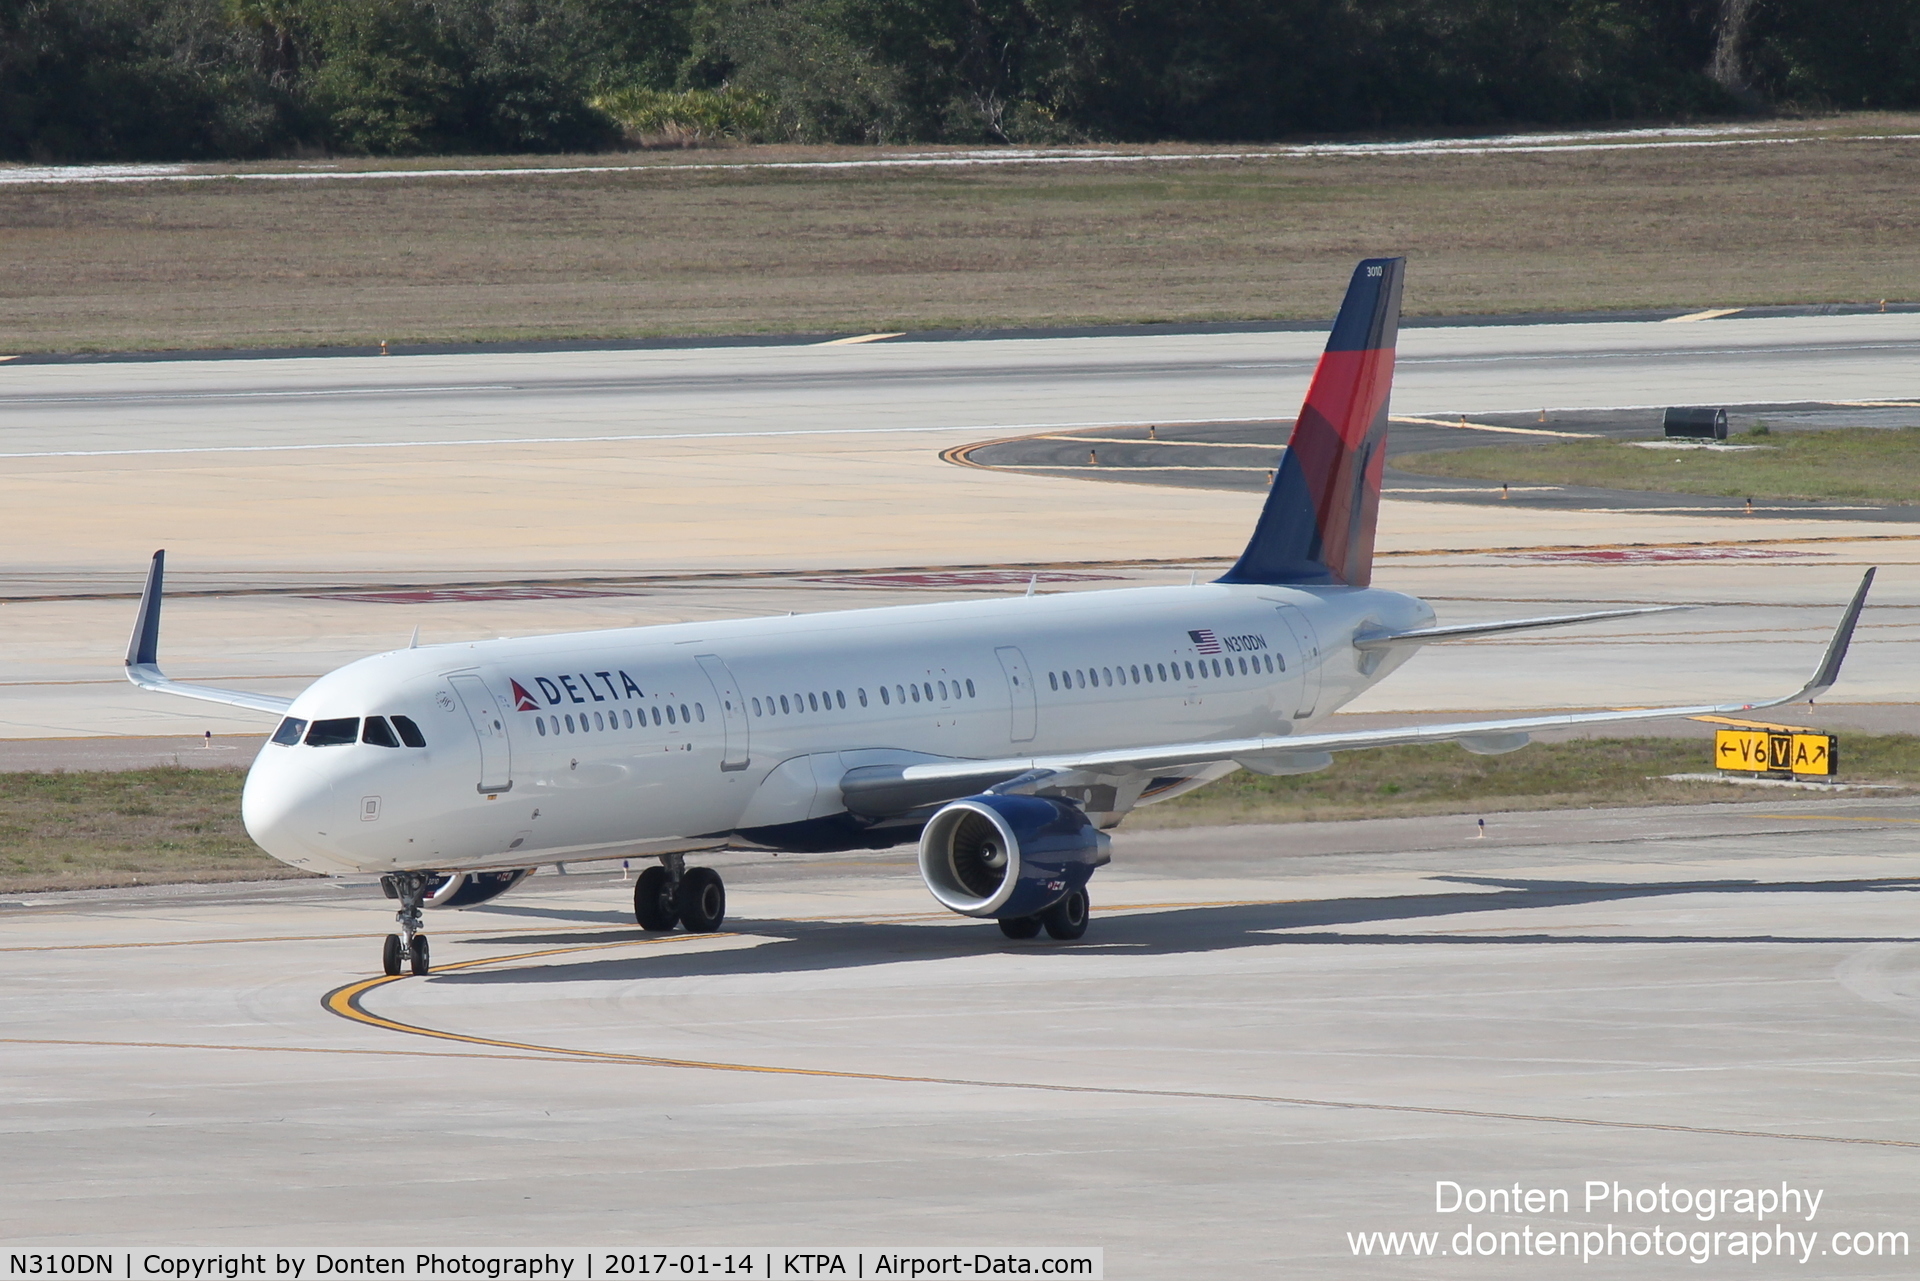 N310DN, 2016 Airbus A321-211 C/N 7293, Delta Flight 2330 (N310DN) arrives at Tampa International Airport following flight from Hartsfield-Jackson International Airport